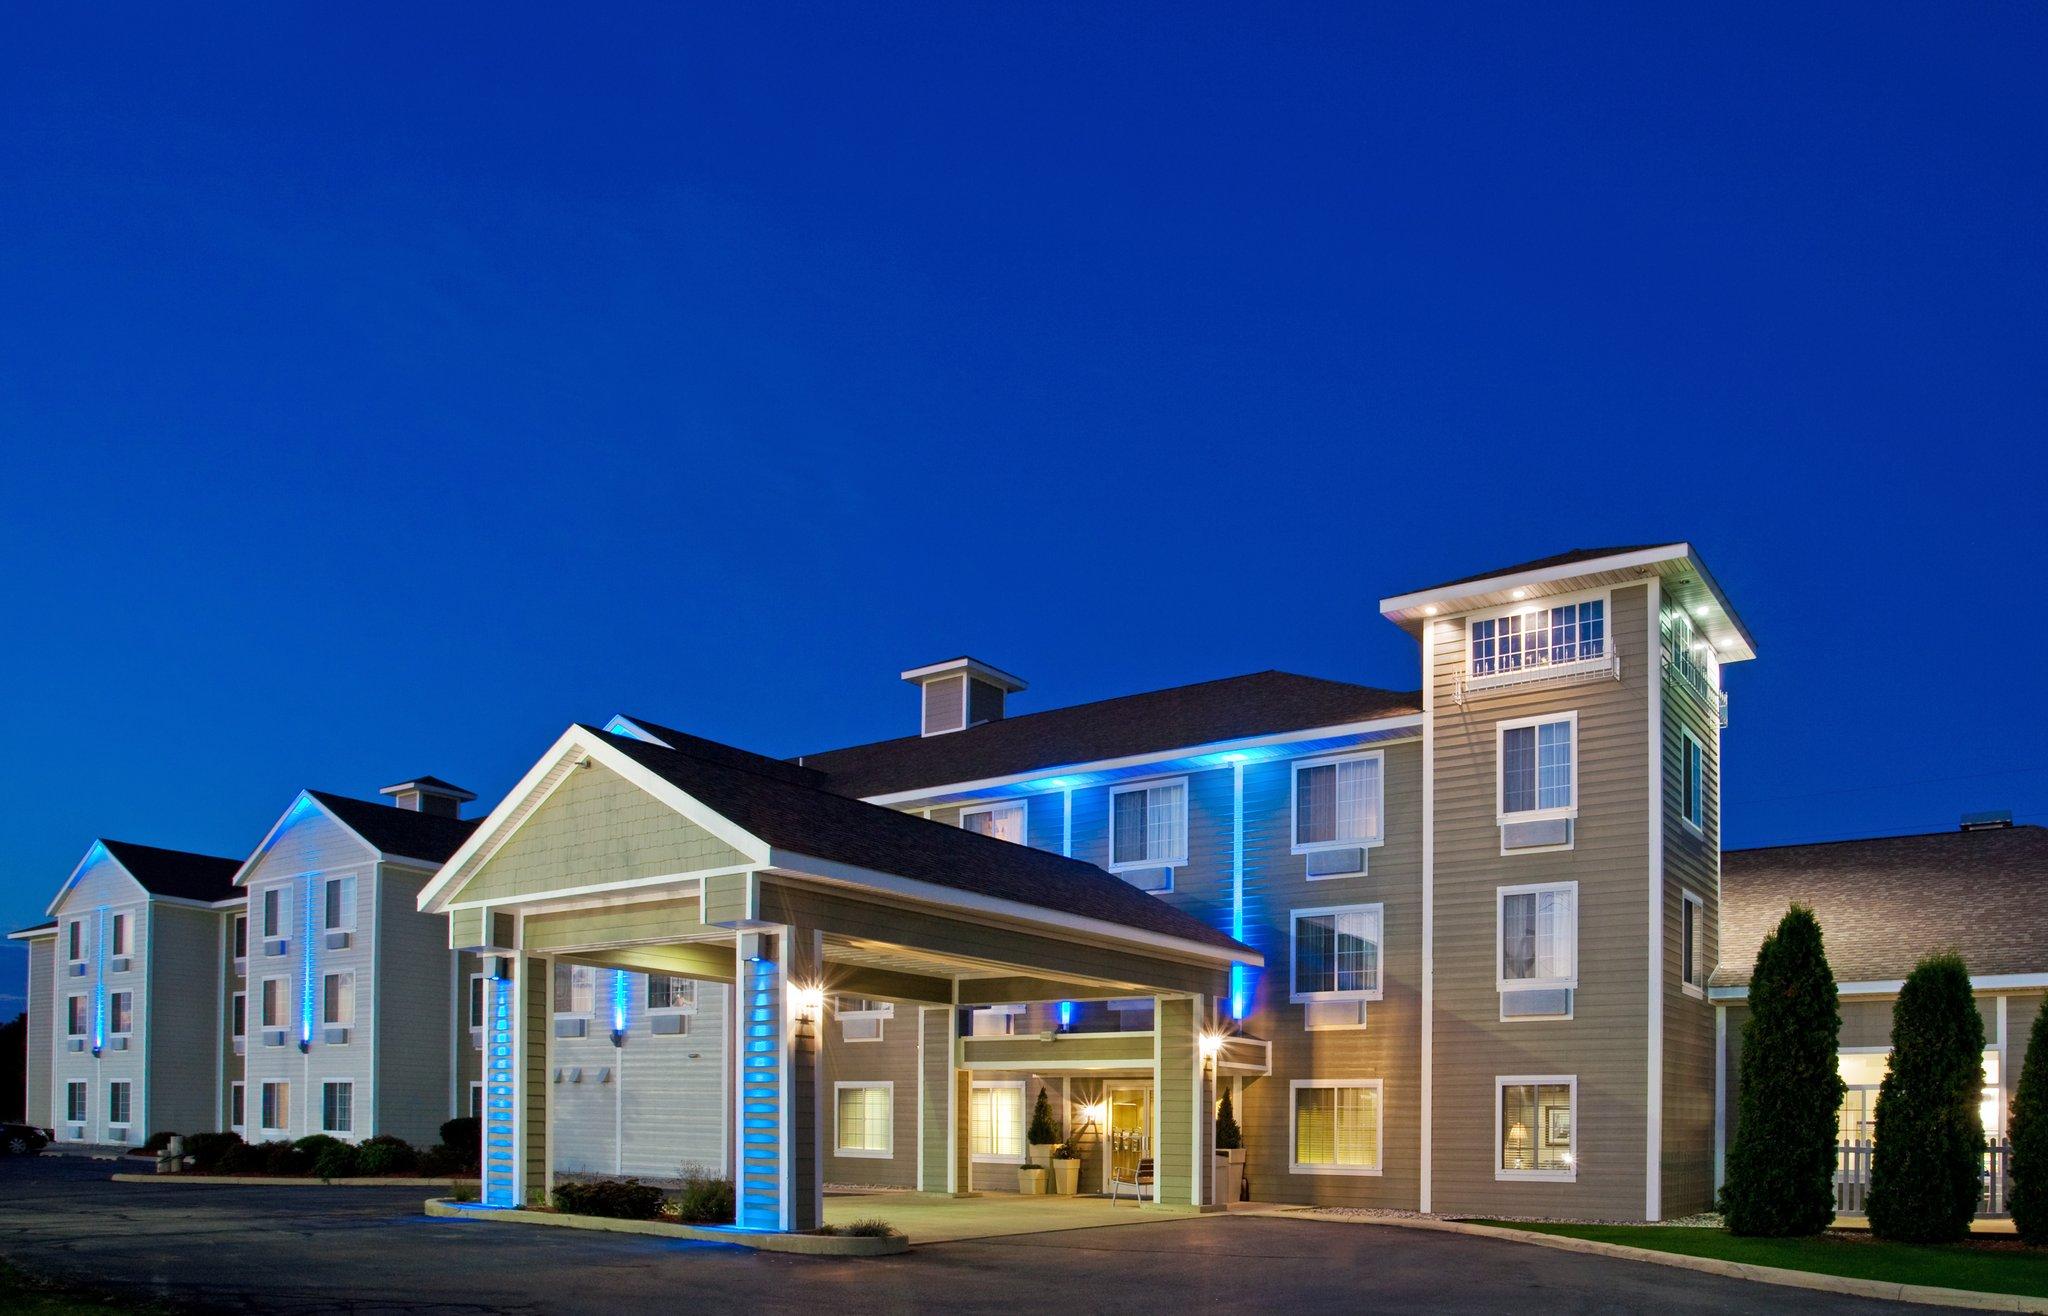 Holiday Inn Express Hotel & Suites New Buffalo in New Buffalo, MI